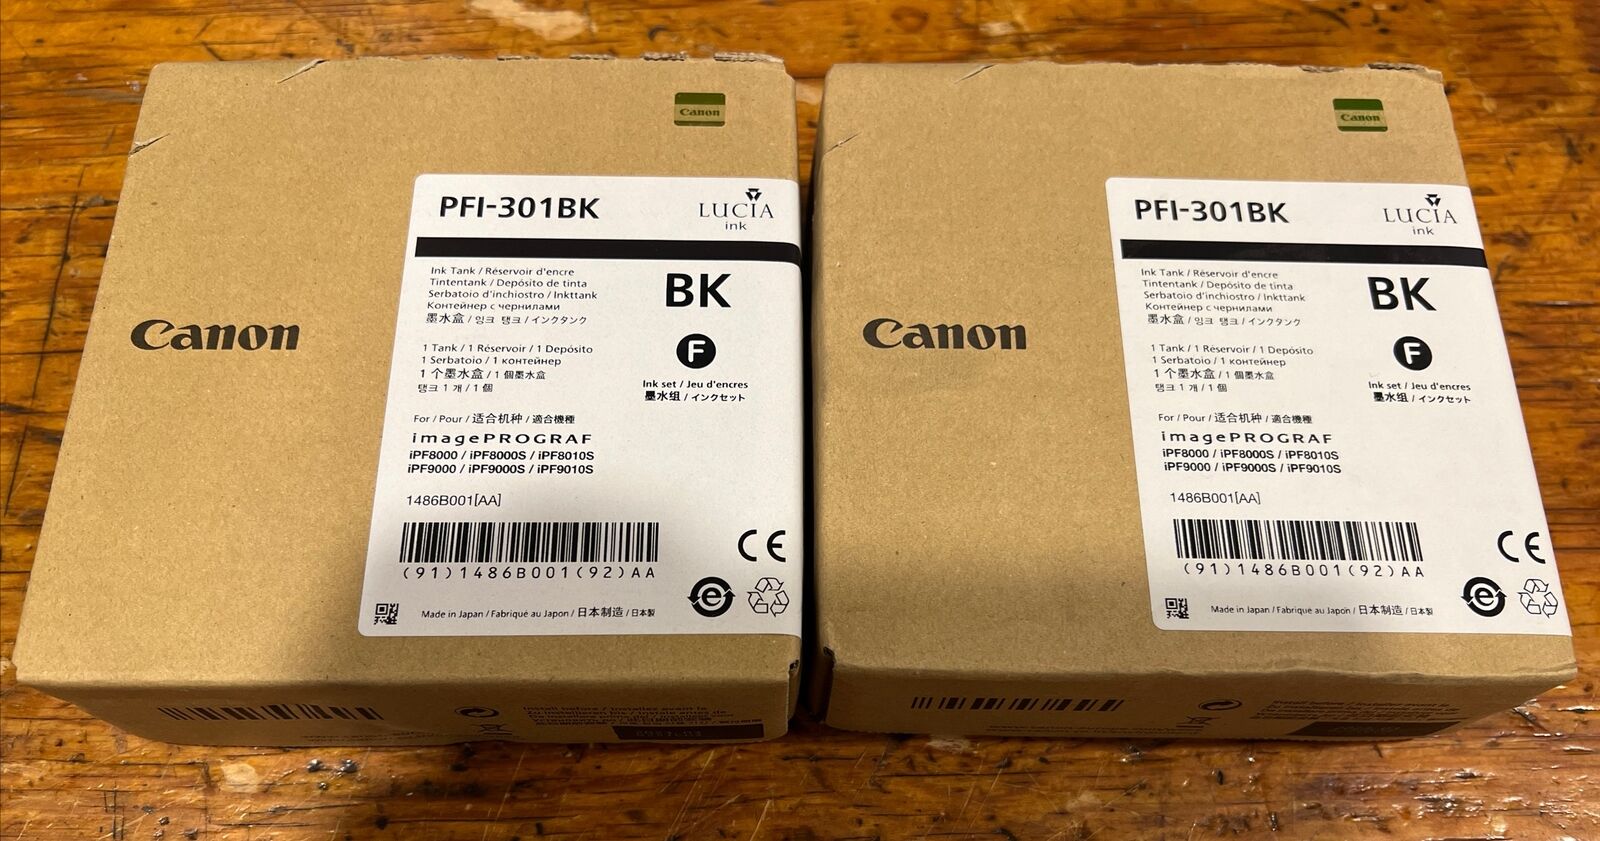 2 New Genuine Factory Sealed Canon PFI-301BK Black Inkjet Cartridges 2023